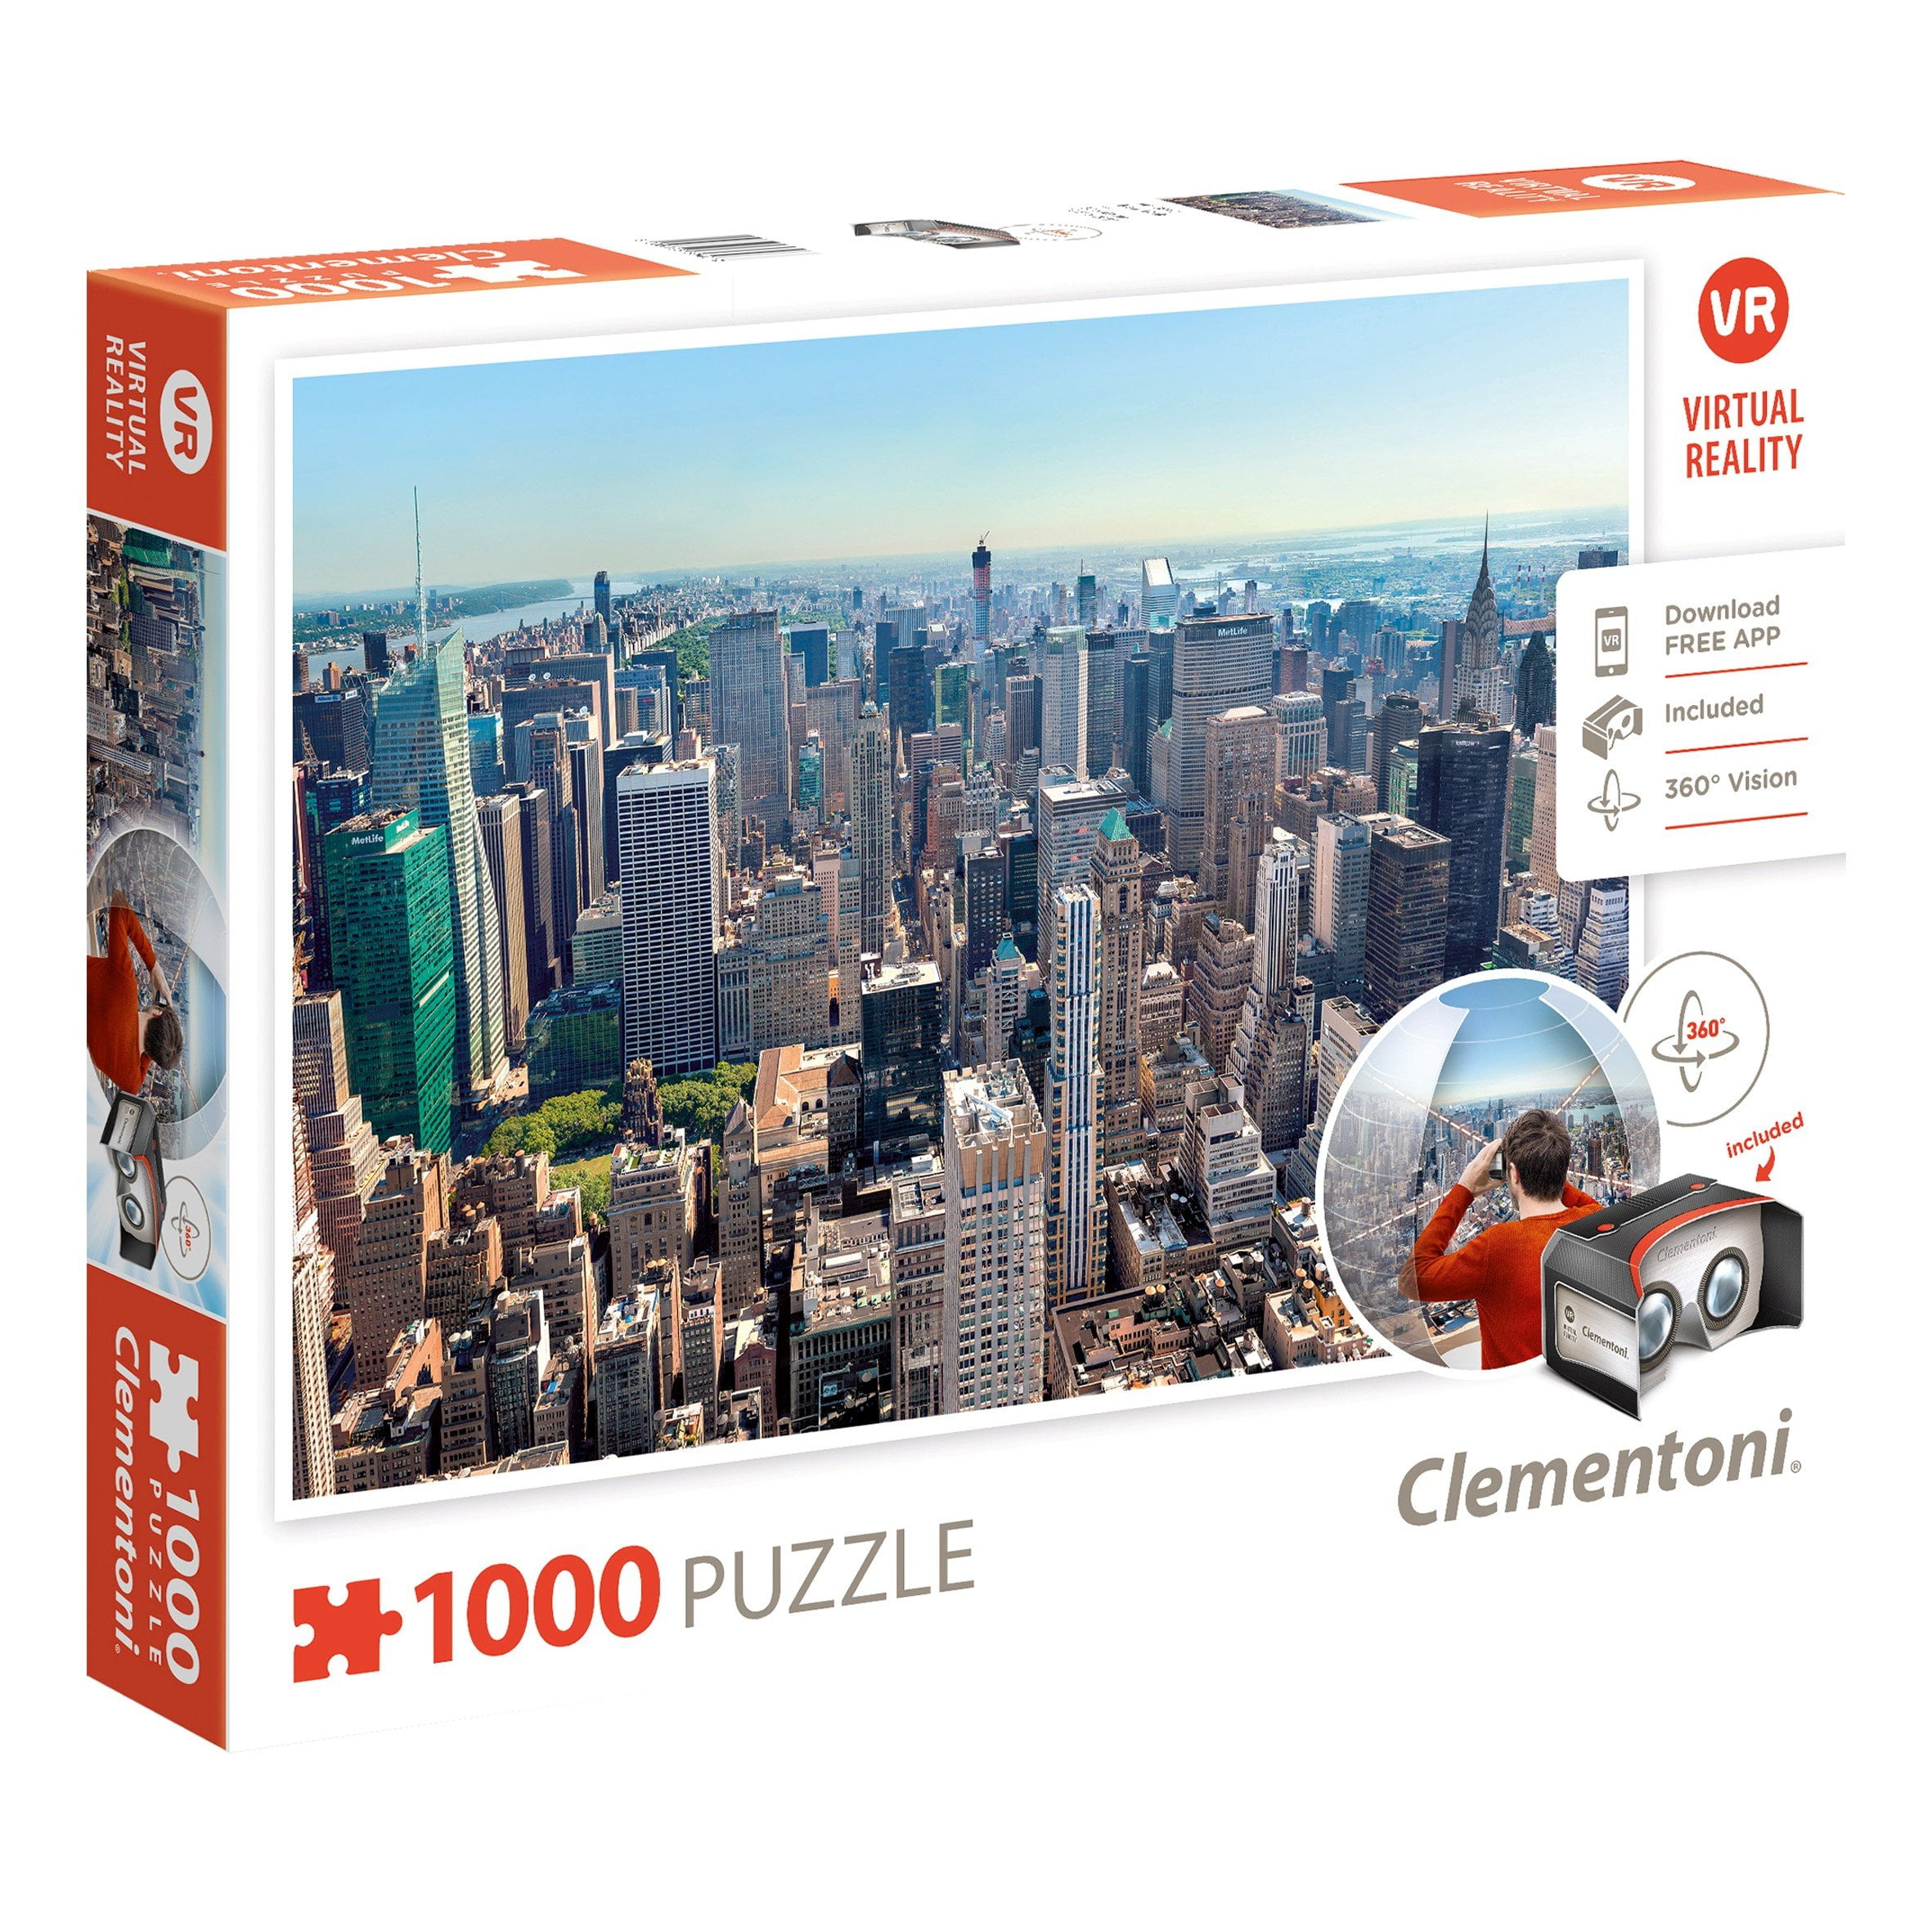 New York Clementoni Panorama Puzzle 1,000 pieces